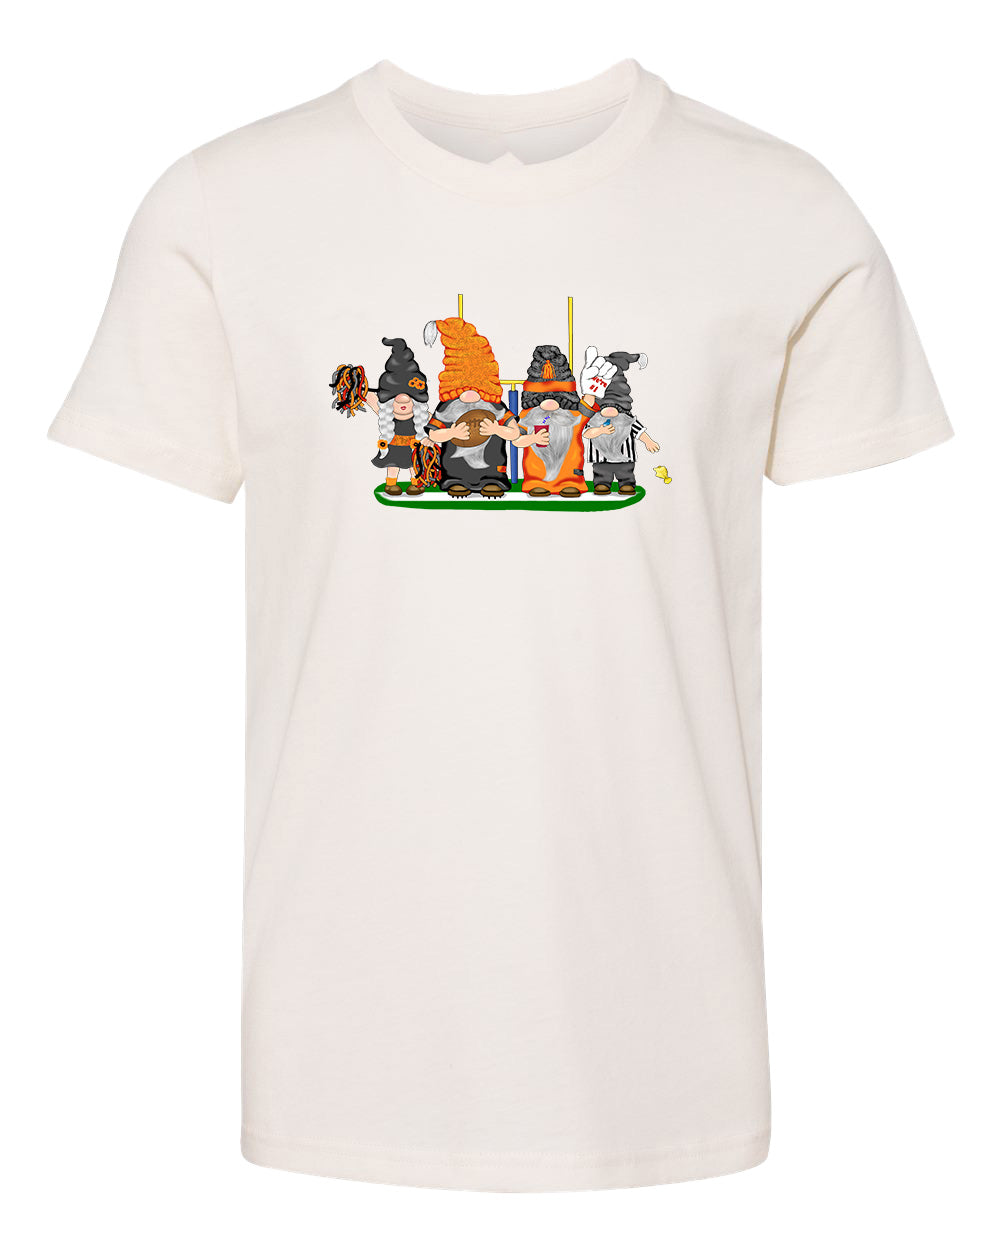 Black & Orange Football Gnomes  (similar to Cincinnati) on Kids T-shirt